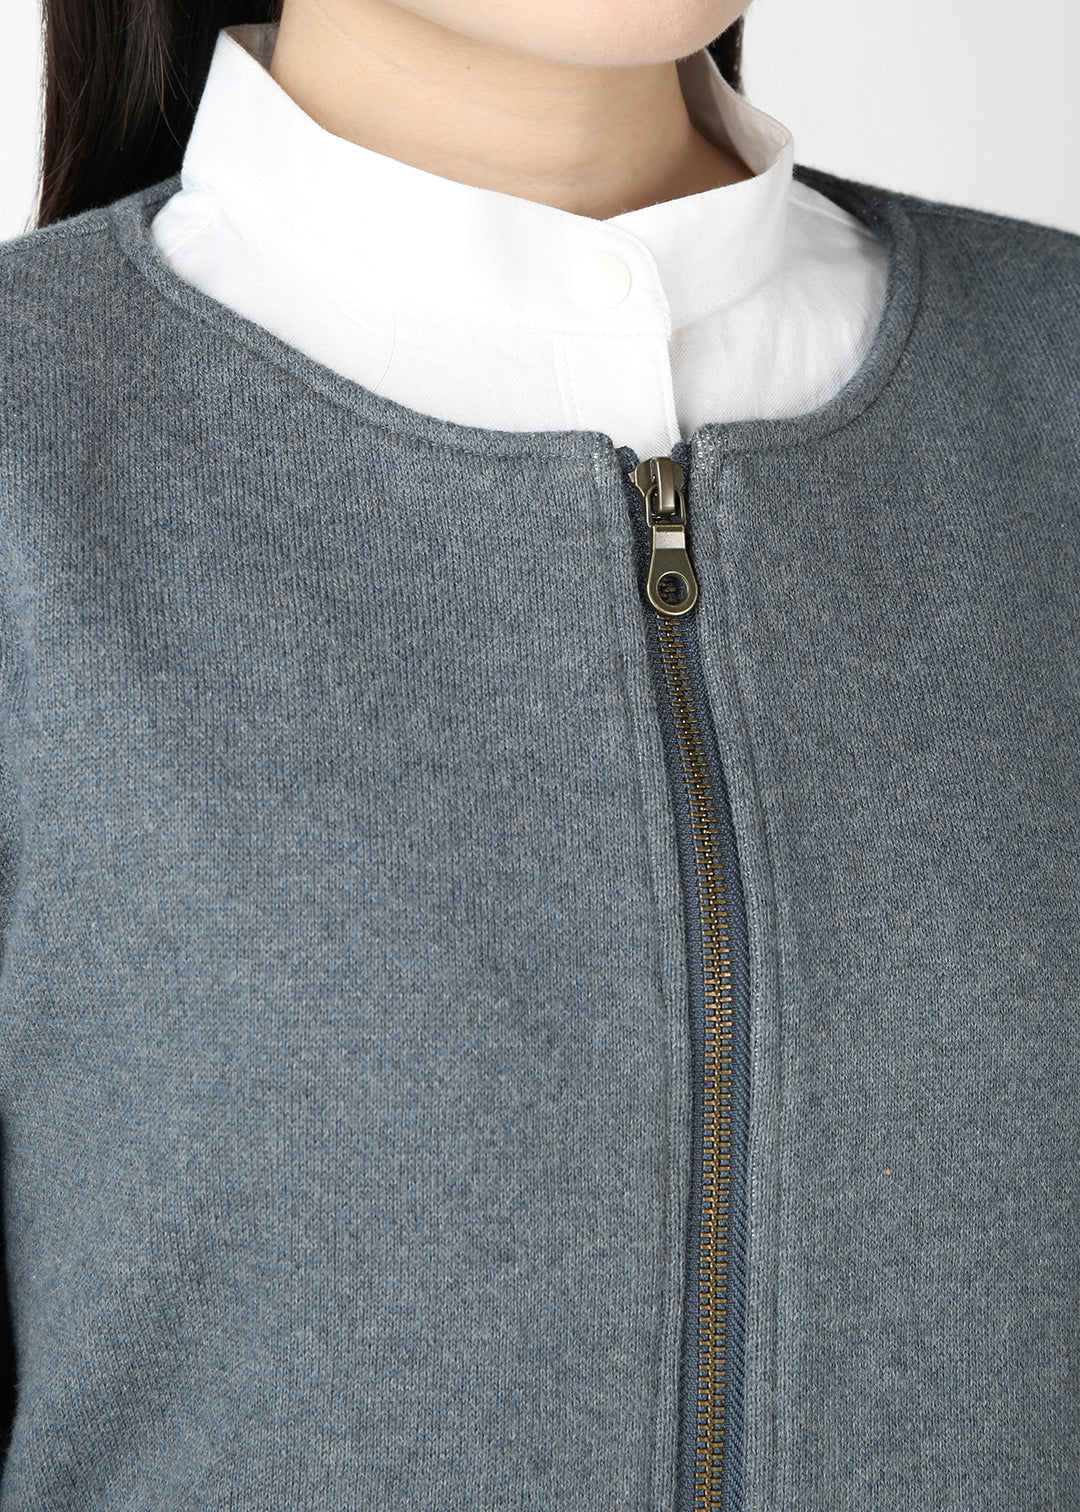 Koiki Zipper Cardigan Cotton Jersey